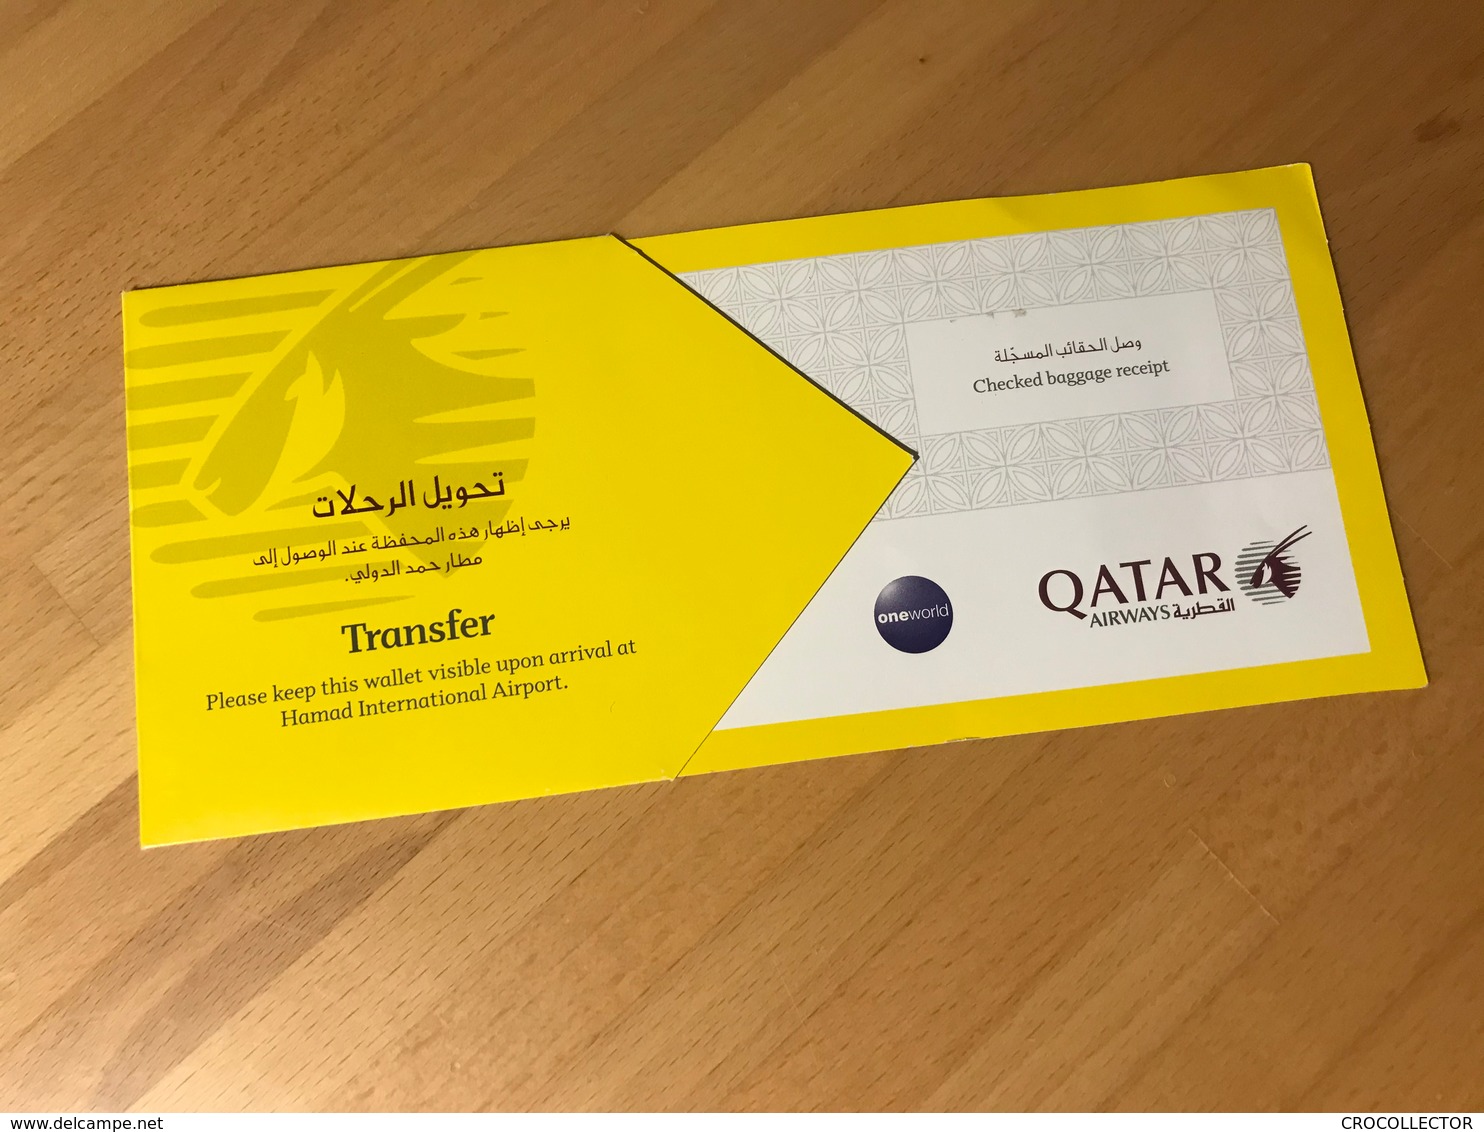 QATAR AIRWAYS ONE WORLD ECONOMY CLASS BOARDING PASS YELLOW JACKET AT HAMAD INTERNATIONAL AIRPORT DOHA - Cancelleria